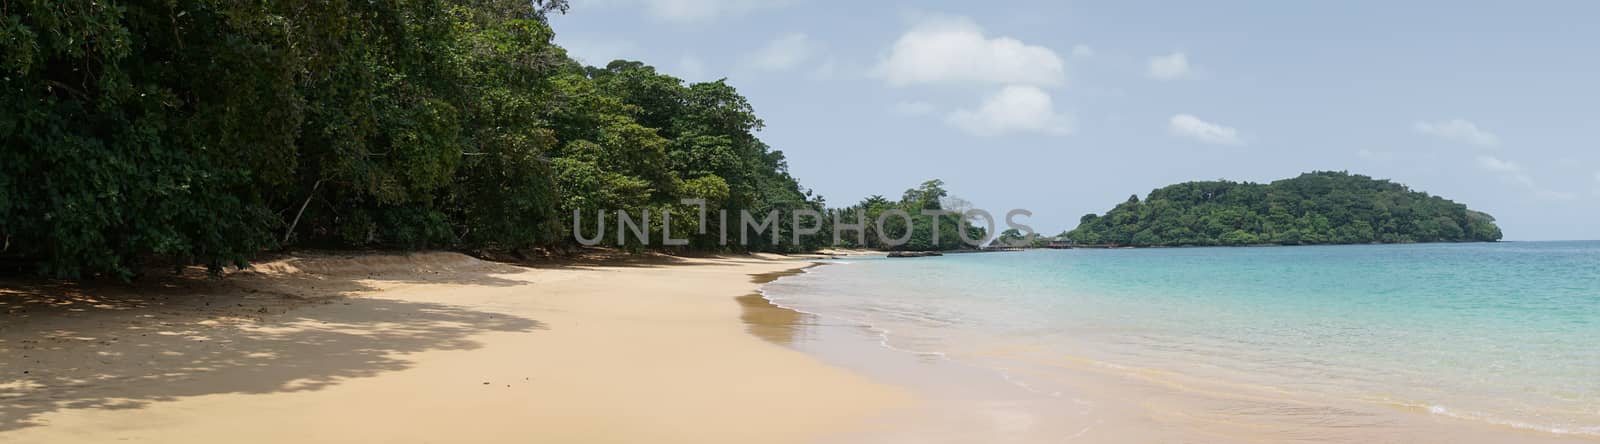 Praia Coco on Principe Island, Sao Tome and Principe, Africa